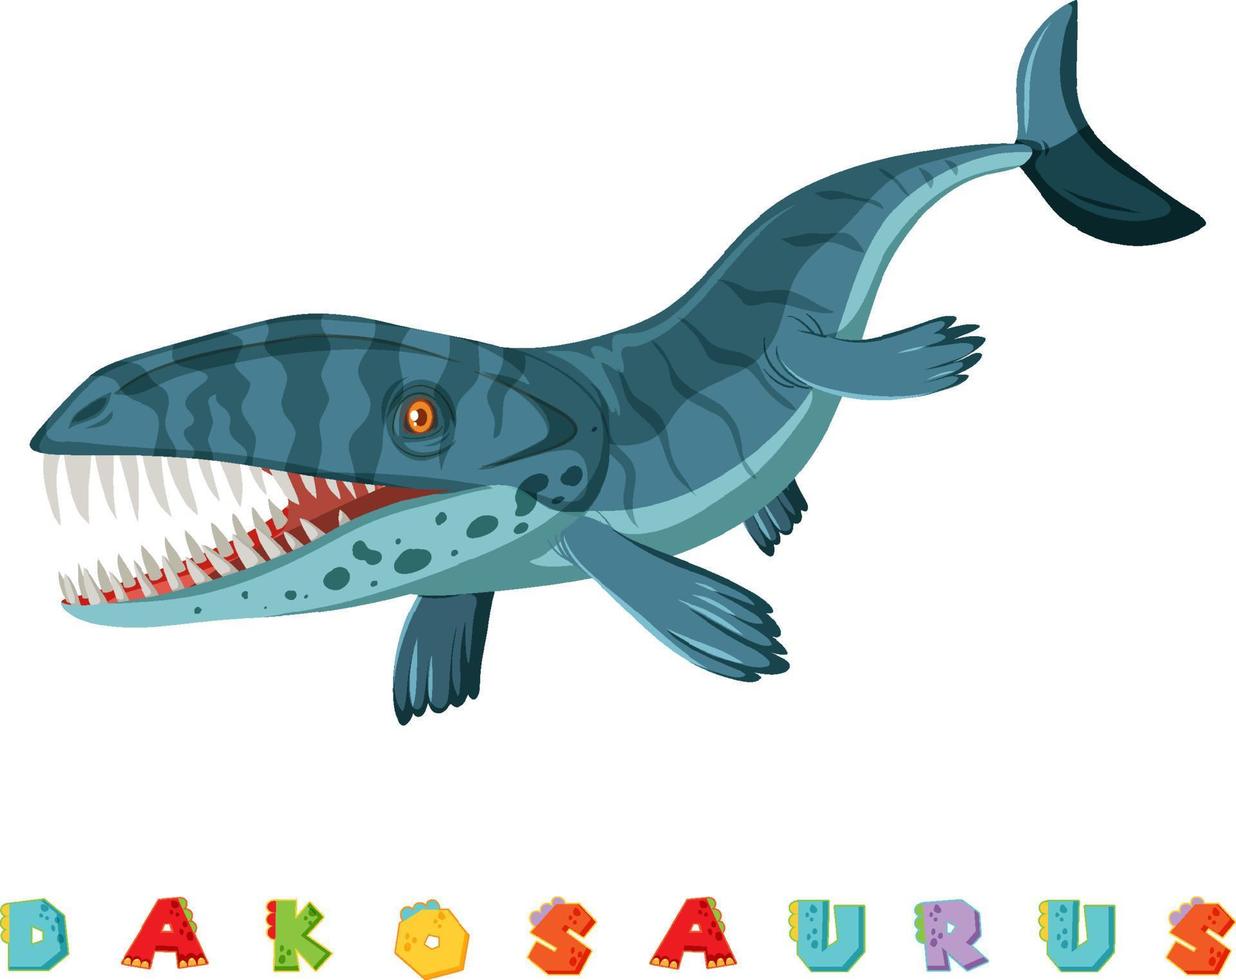 wordcard dinosauro per dalpsaurus vettore